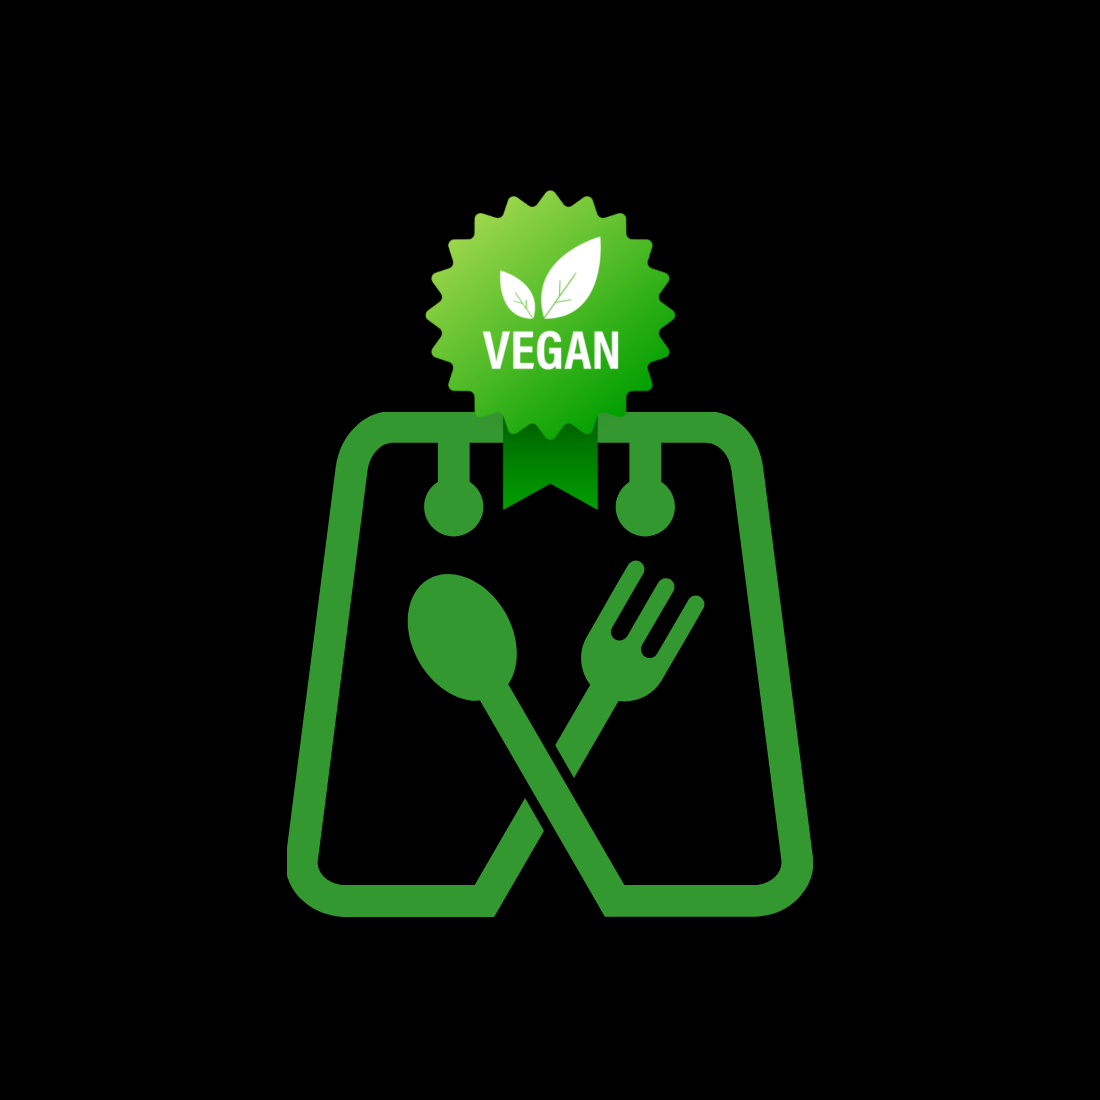 Vegan Logo Shipping for Any Company cover image.